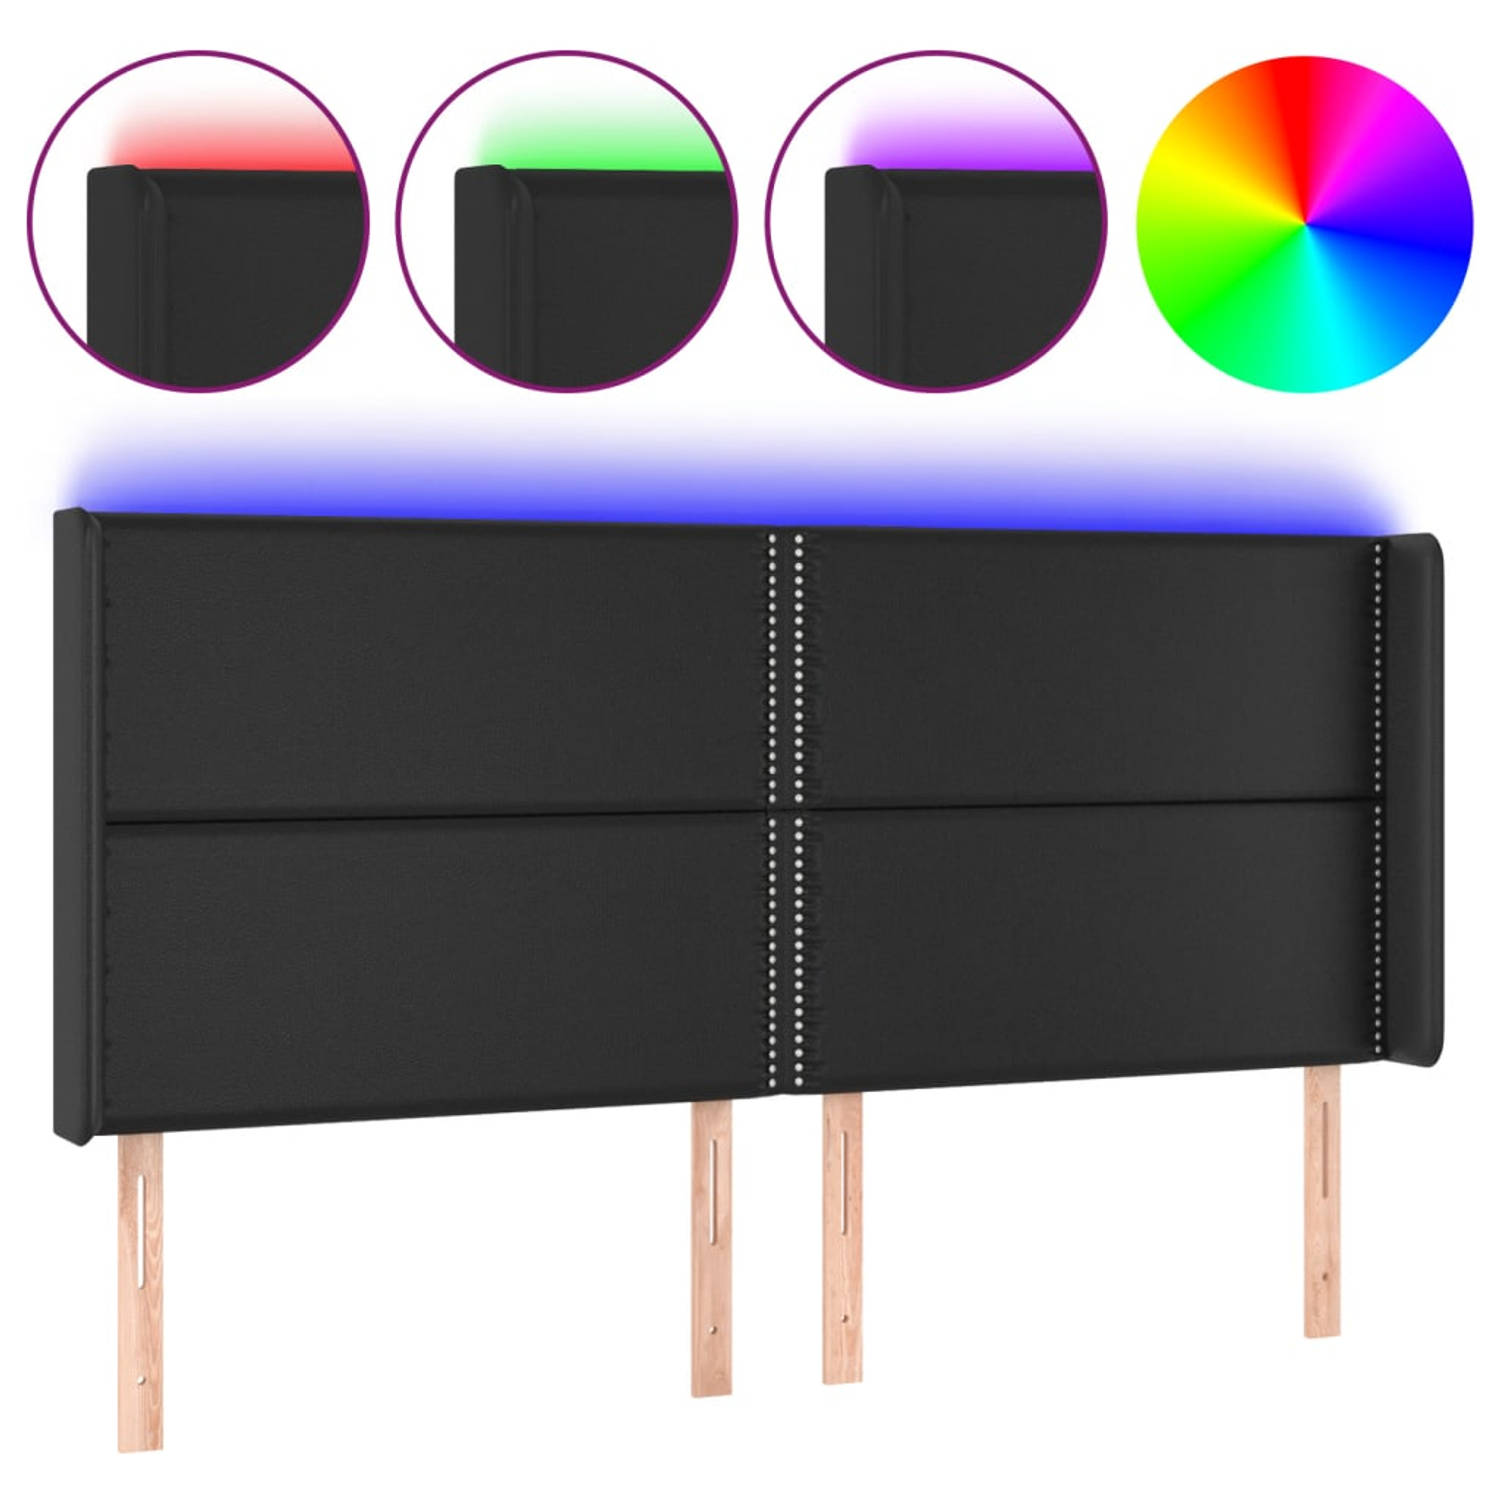 The Living Store LED-Hoofdbord Hoofdeinde - 163 x 16 cm - Duurzaam Kunstleer - Kleurrijke LED-verlichting - Verstelbare Hoogte - Snijdbare LED-strip - Montagehandleiding Inbegrepen